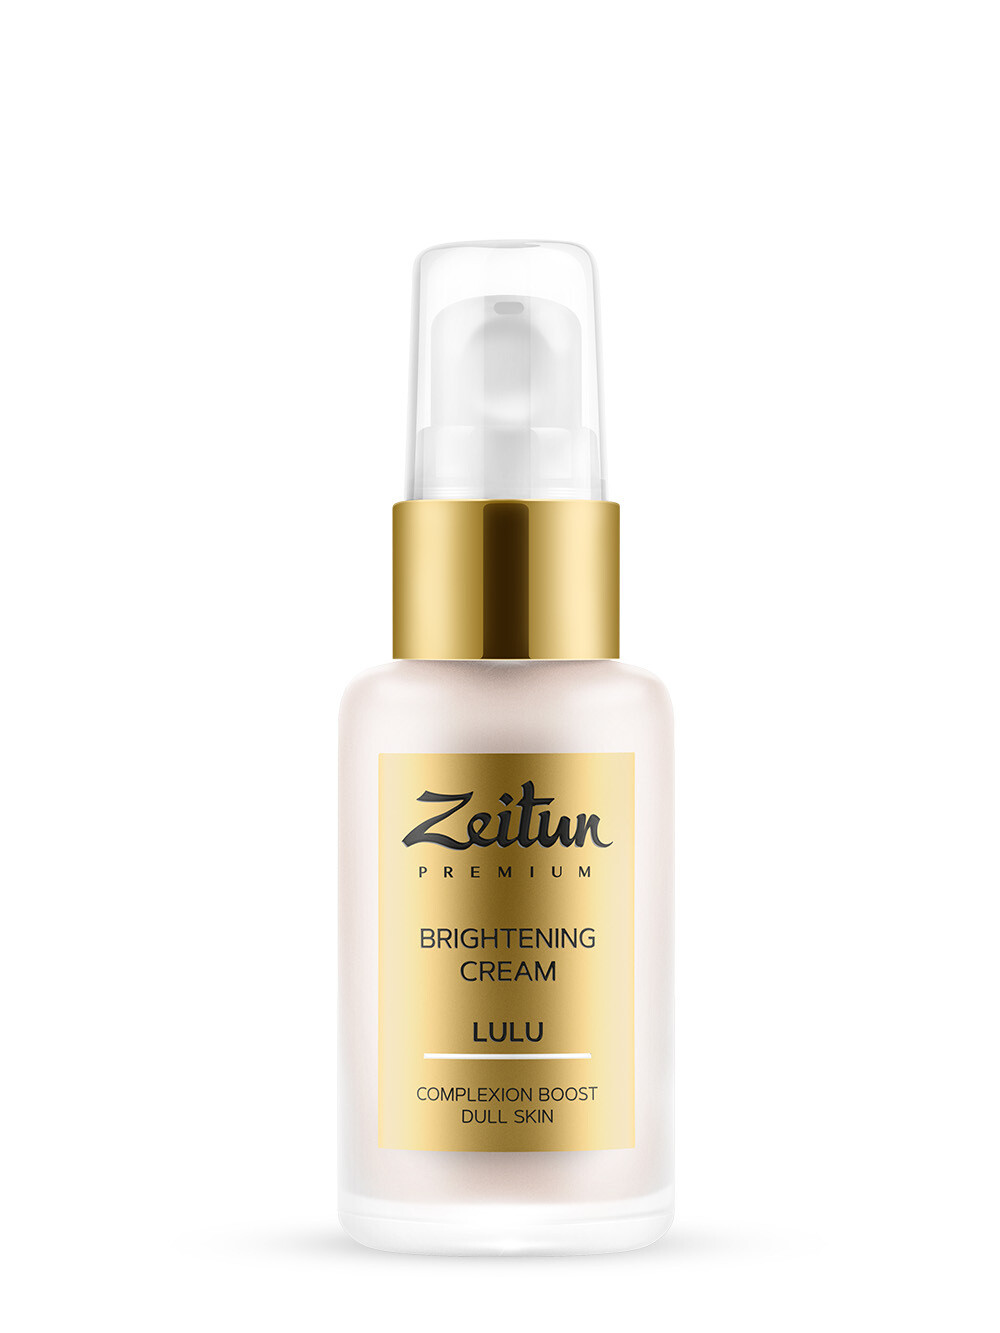 Zeitun Premium Brightening Cream Lulu Крем-совершенство для лица идеального тона лица